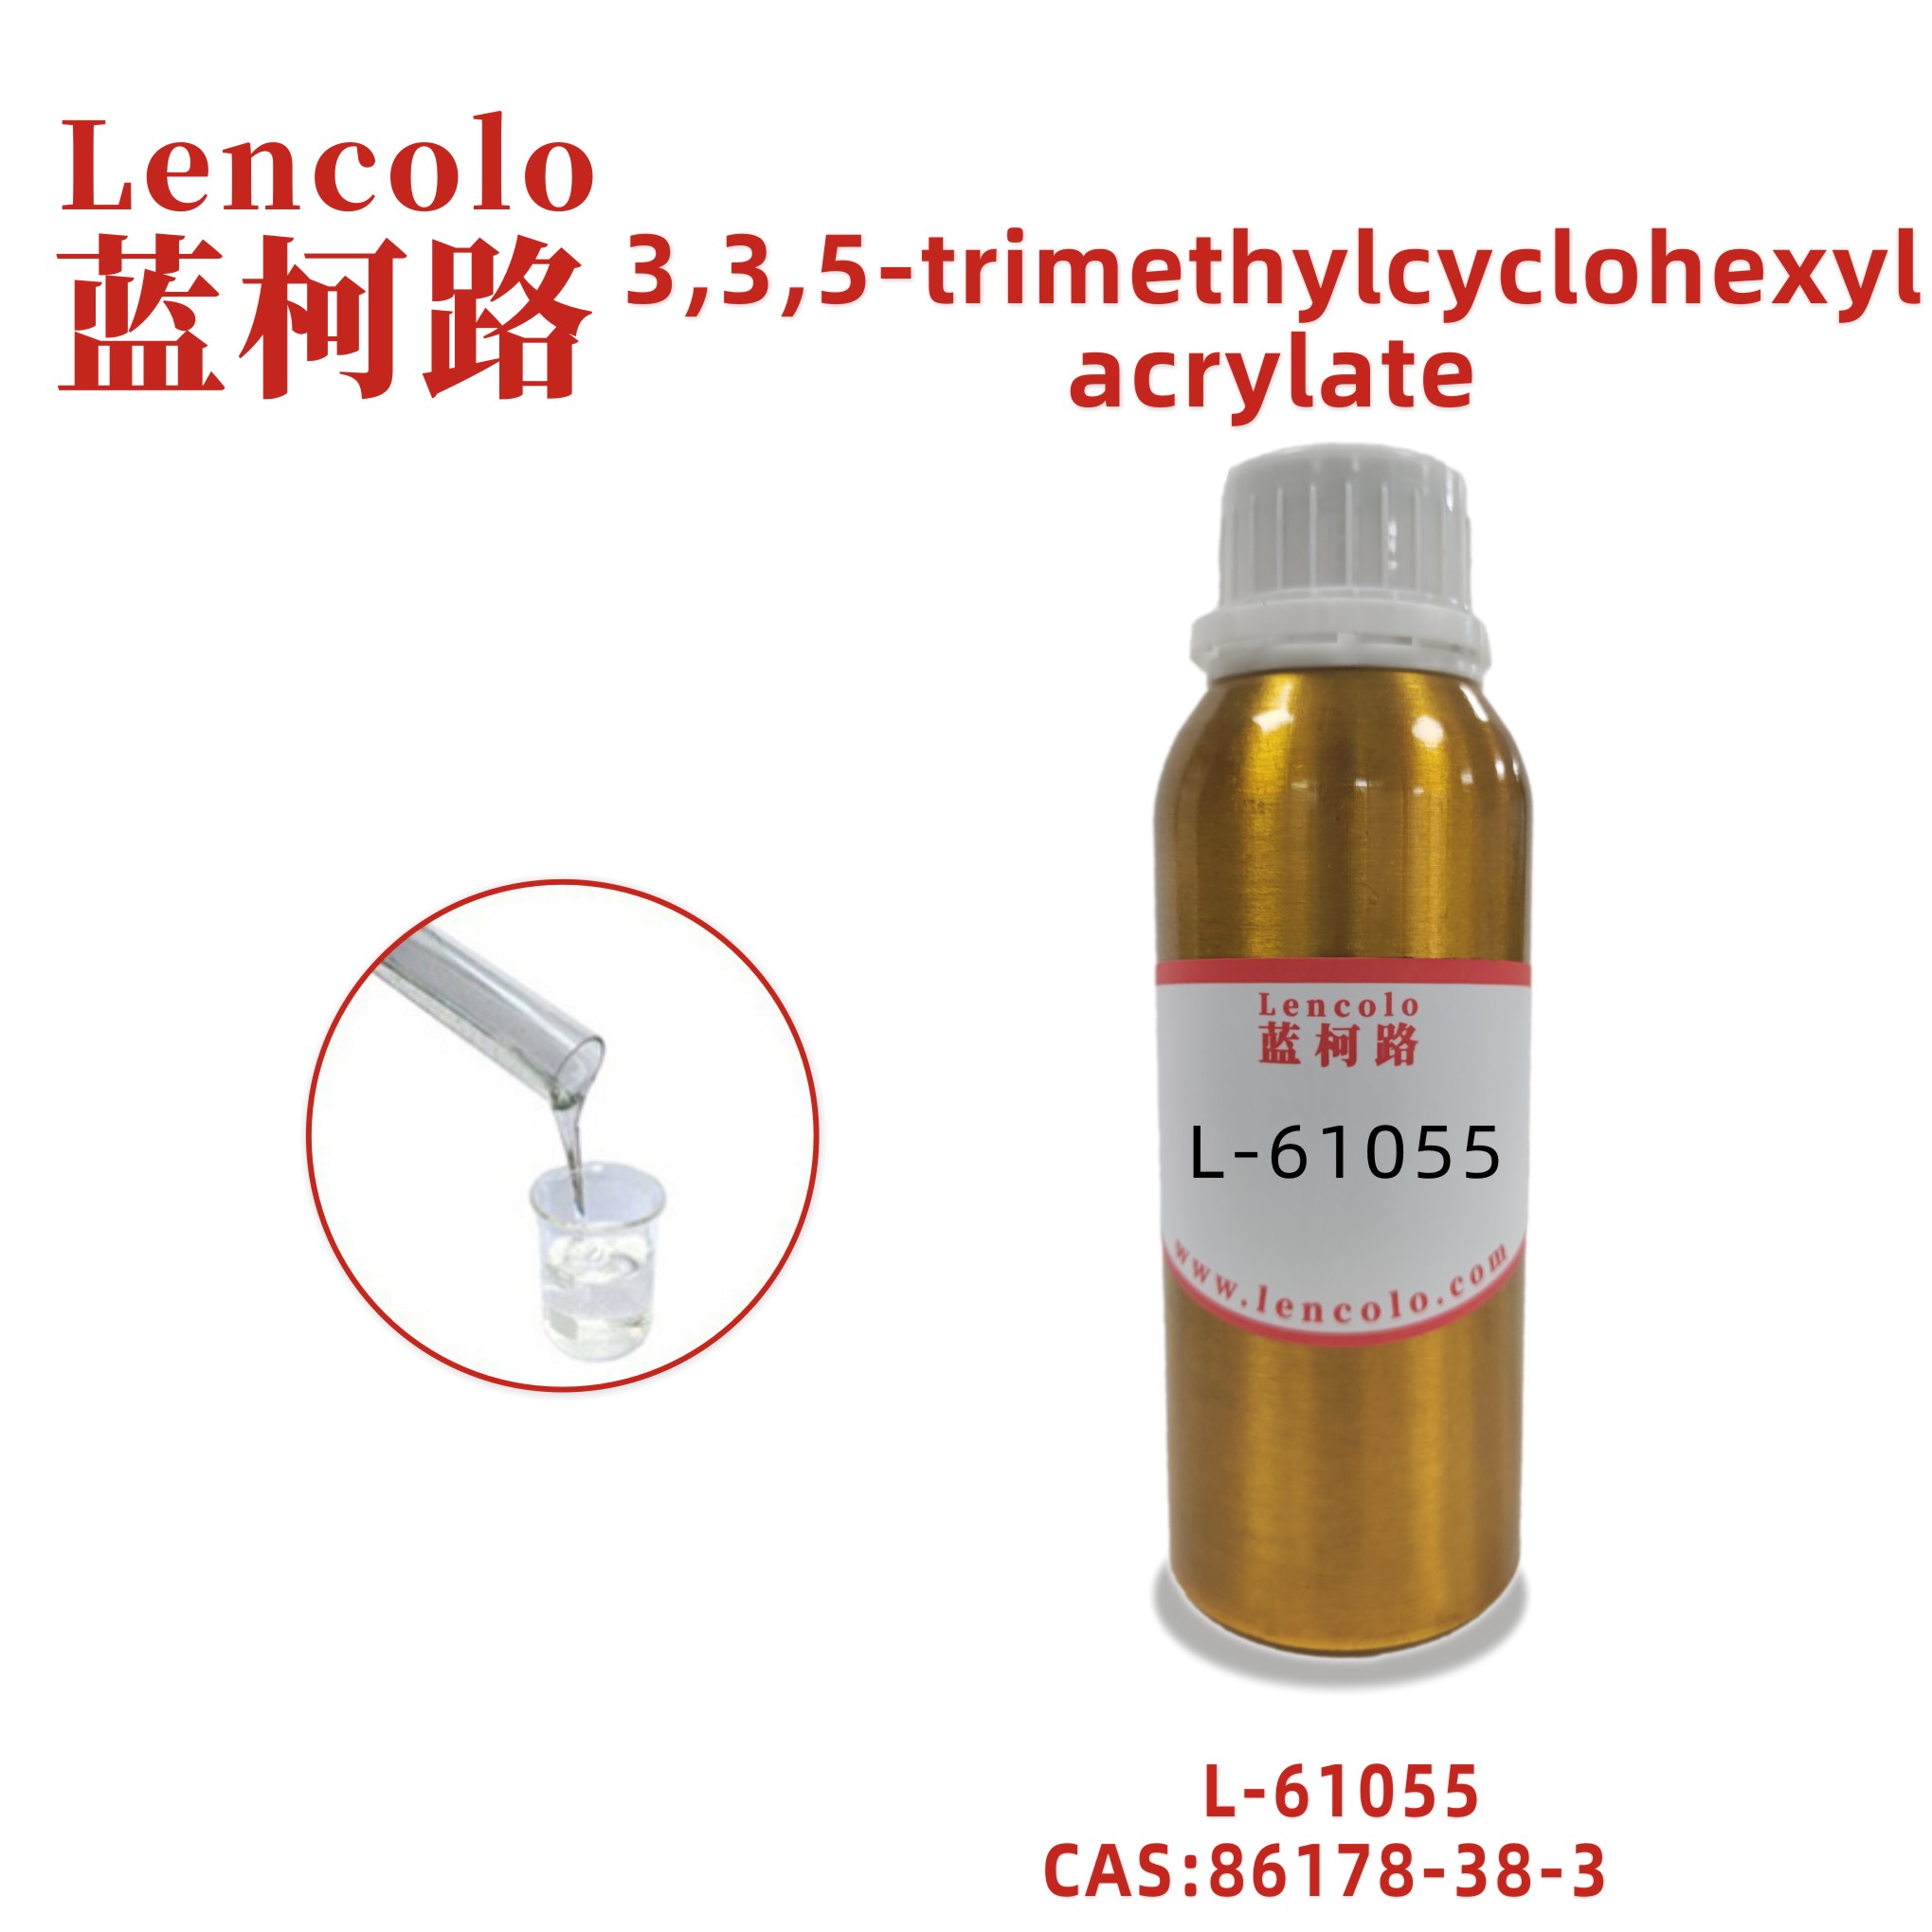 L-61055 (TMCHA) 3,3,5-trimethylcyclohexyl acrylate uv monomer for photo-curing polymerization fields such as UV coatings